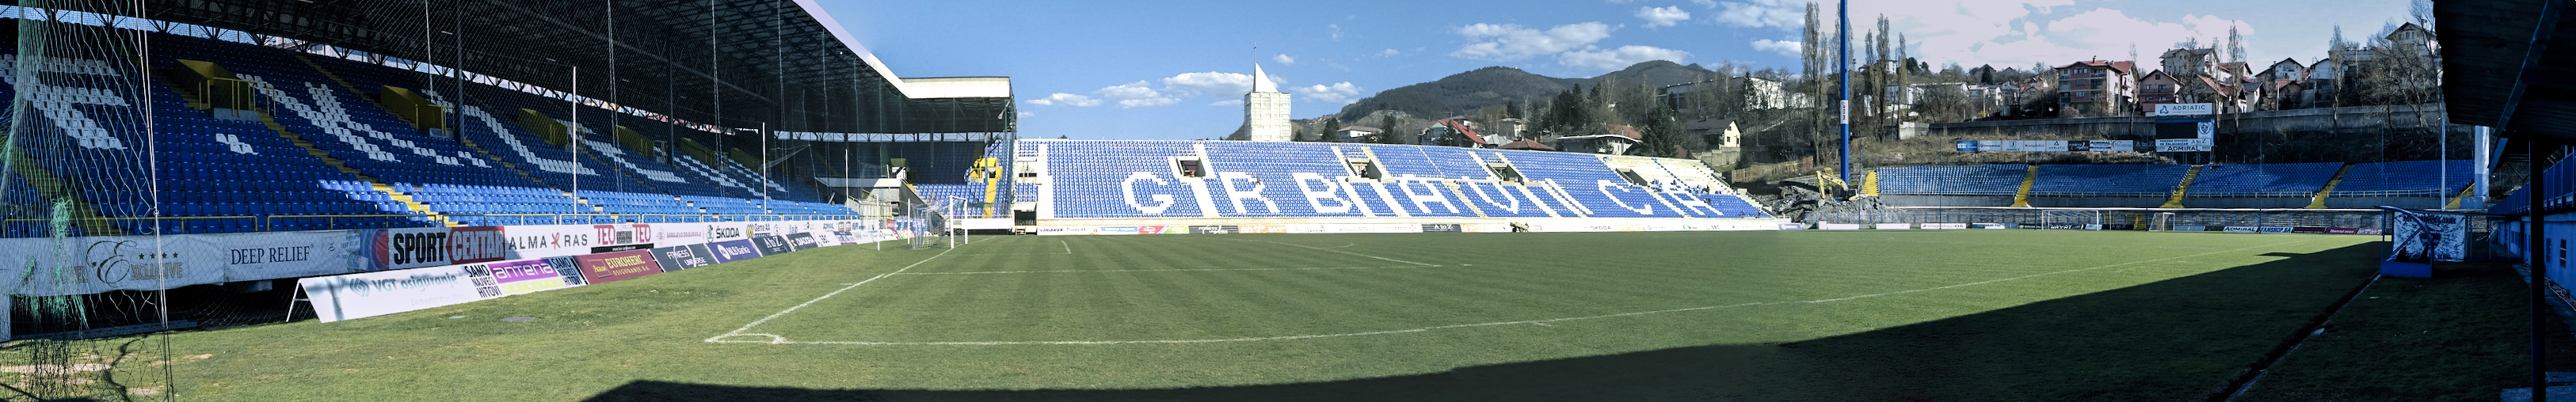 Stadion Grbavica Panorama.jpg